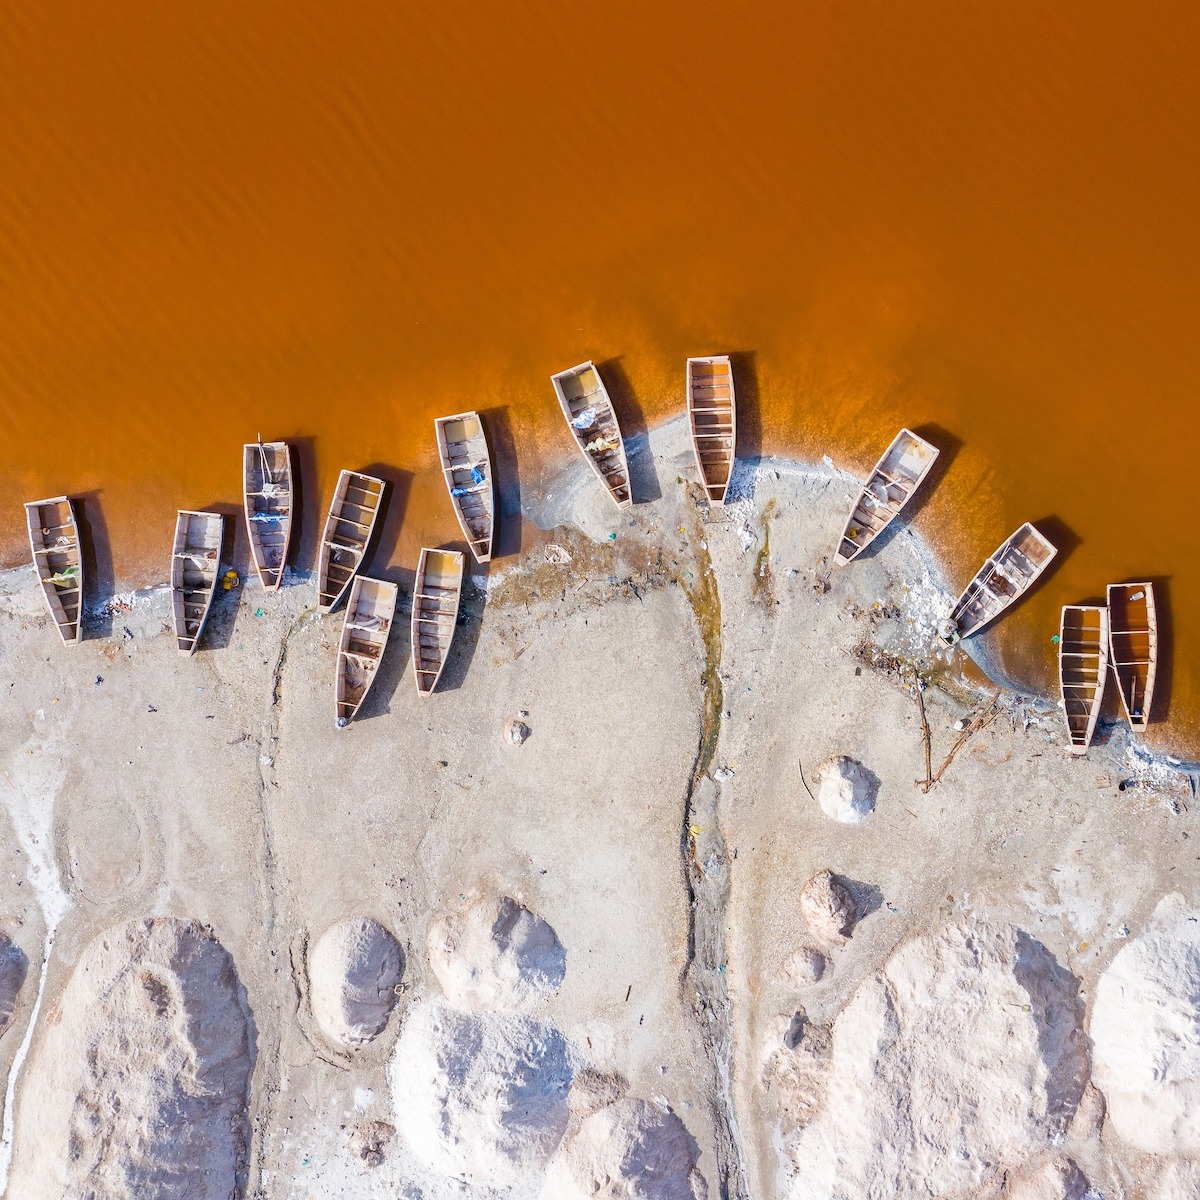 Several wooden boats laying on shore at an orange brown lake